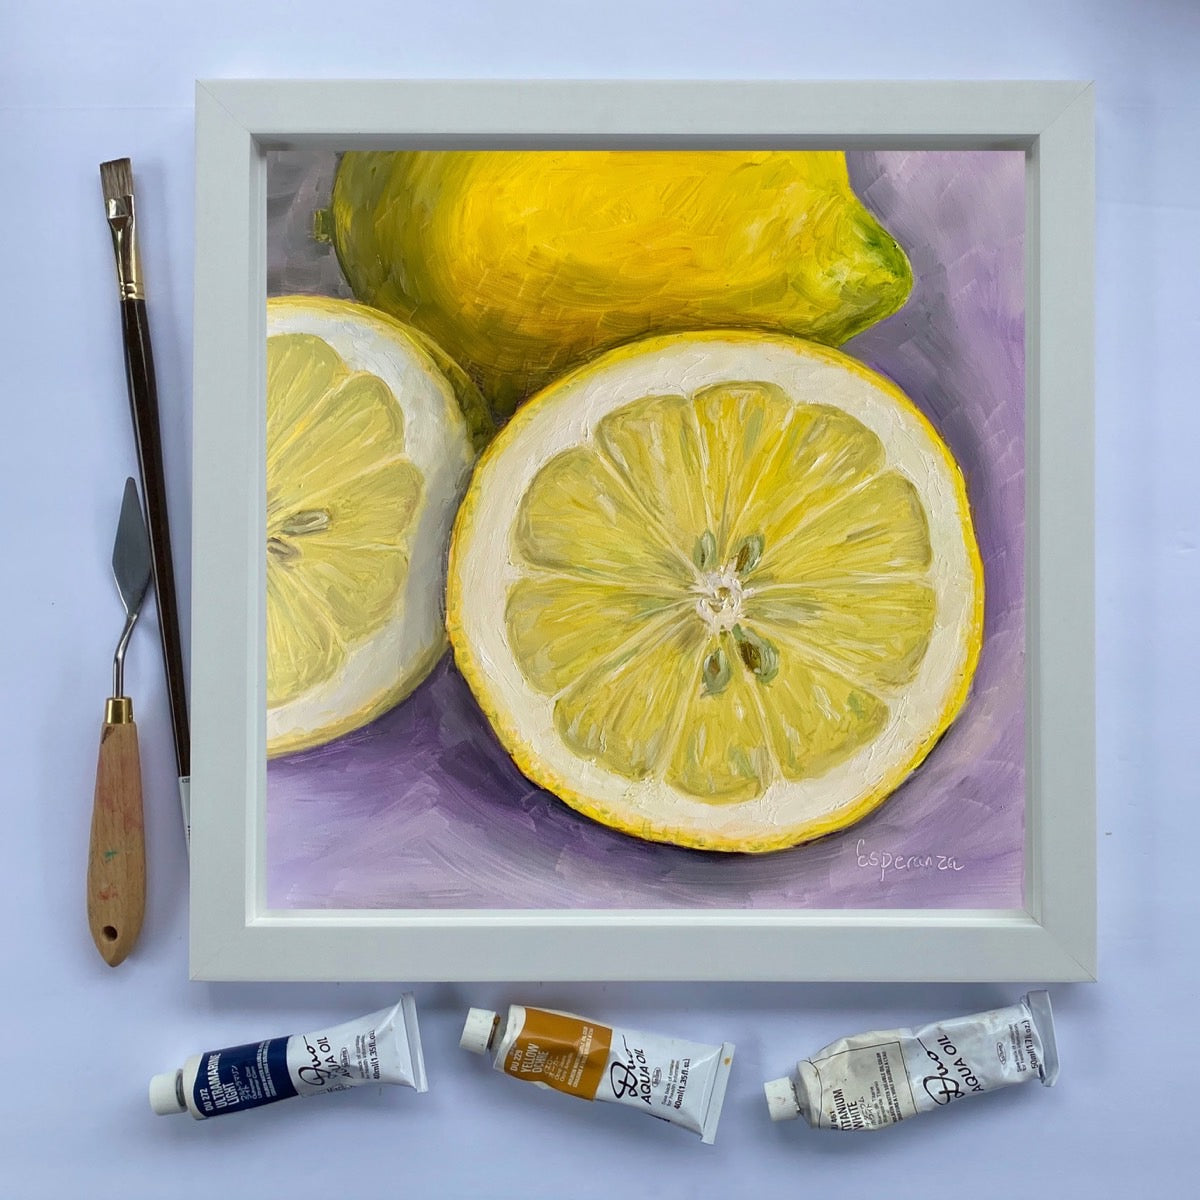 "Life's Lemons" 12x12 original painting